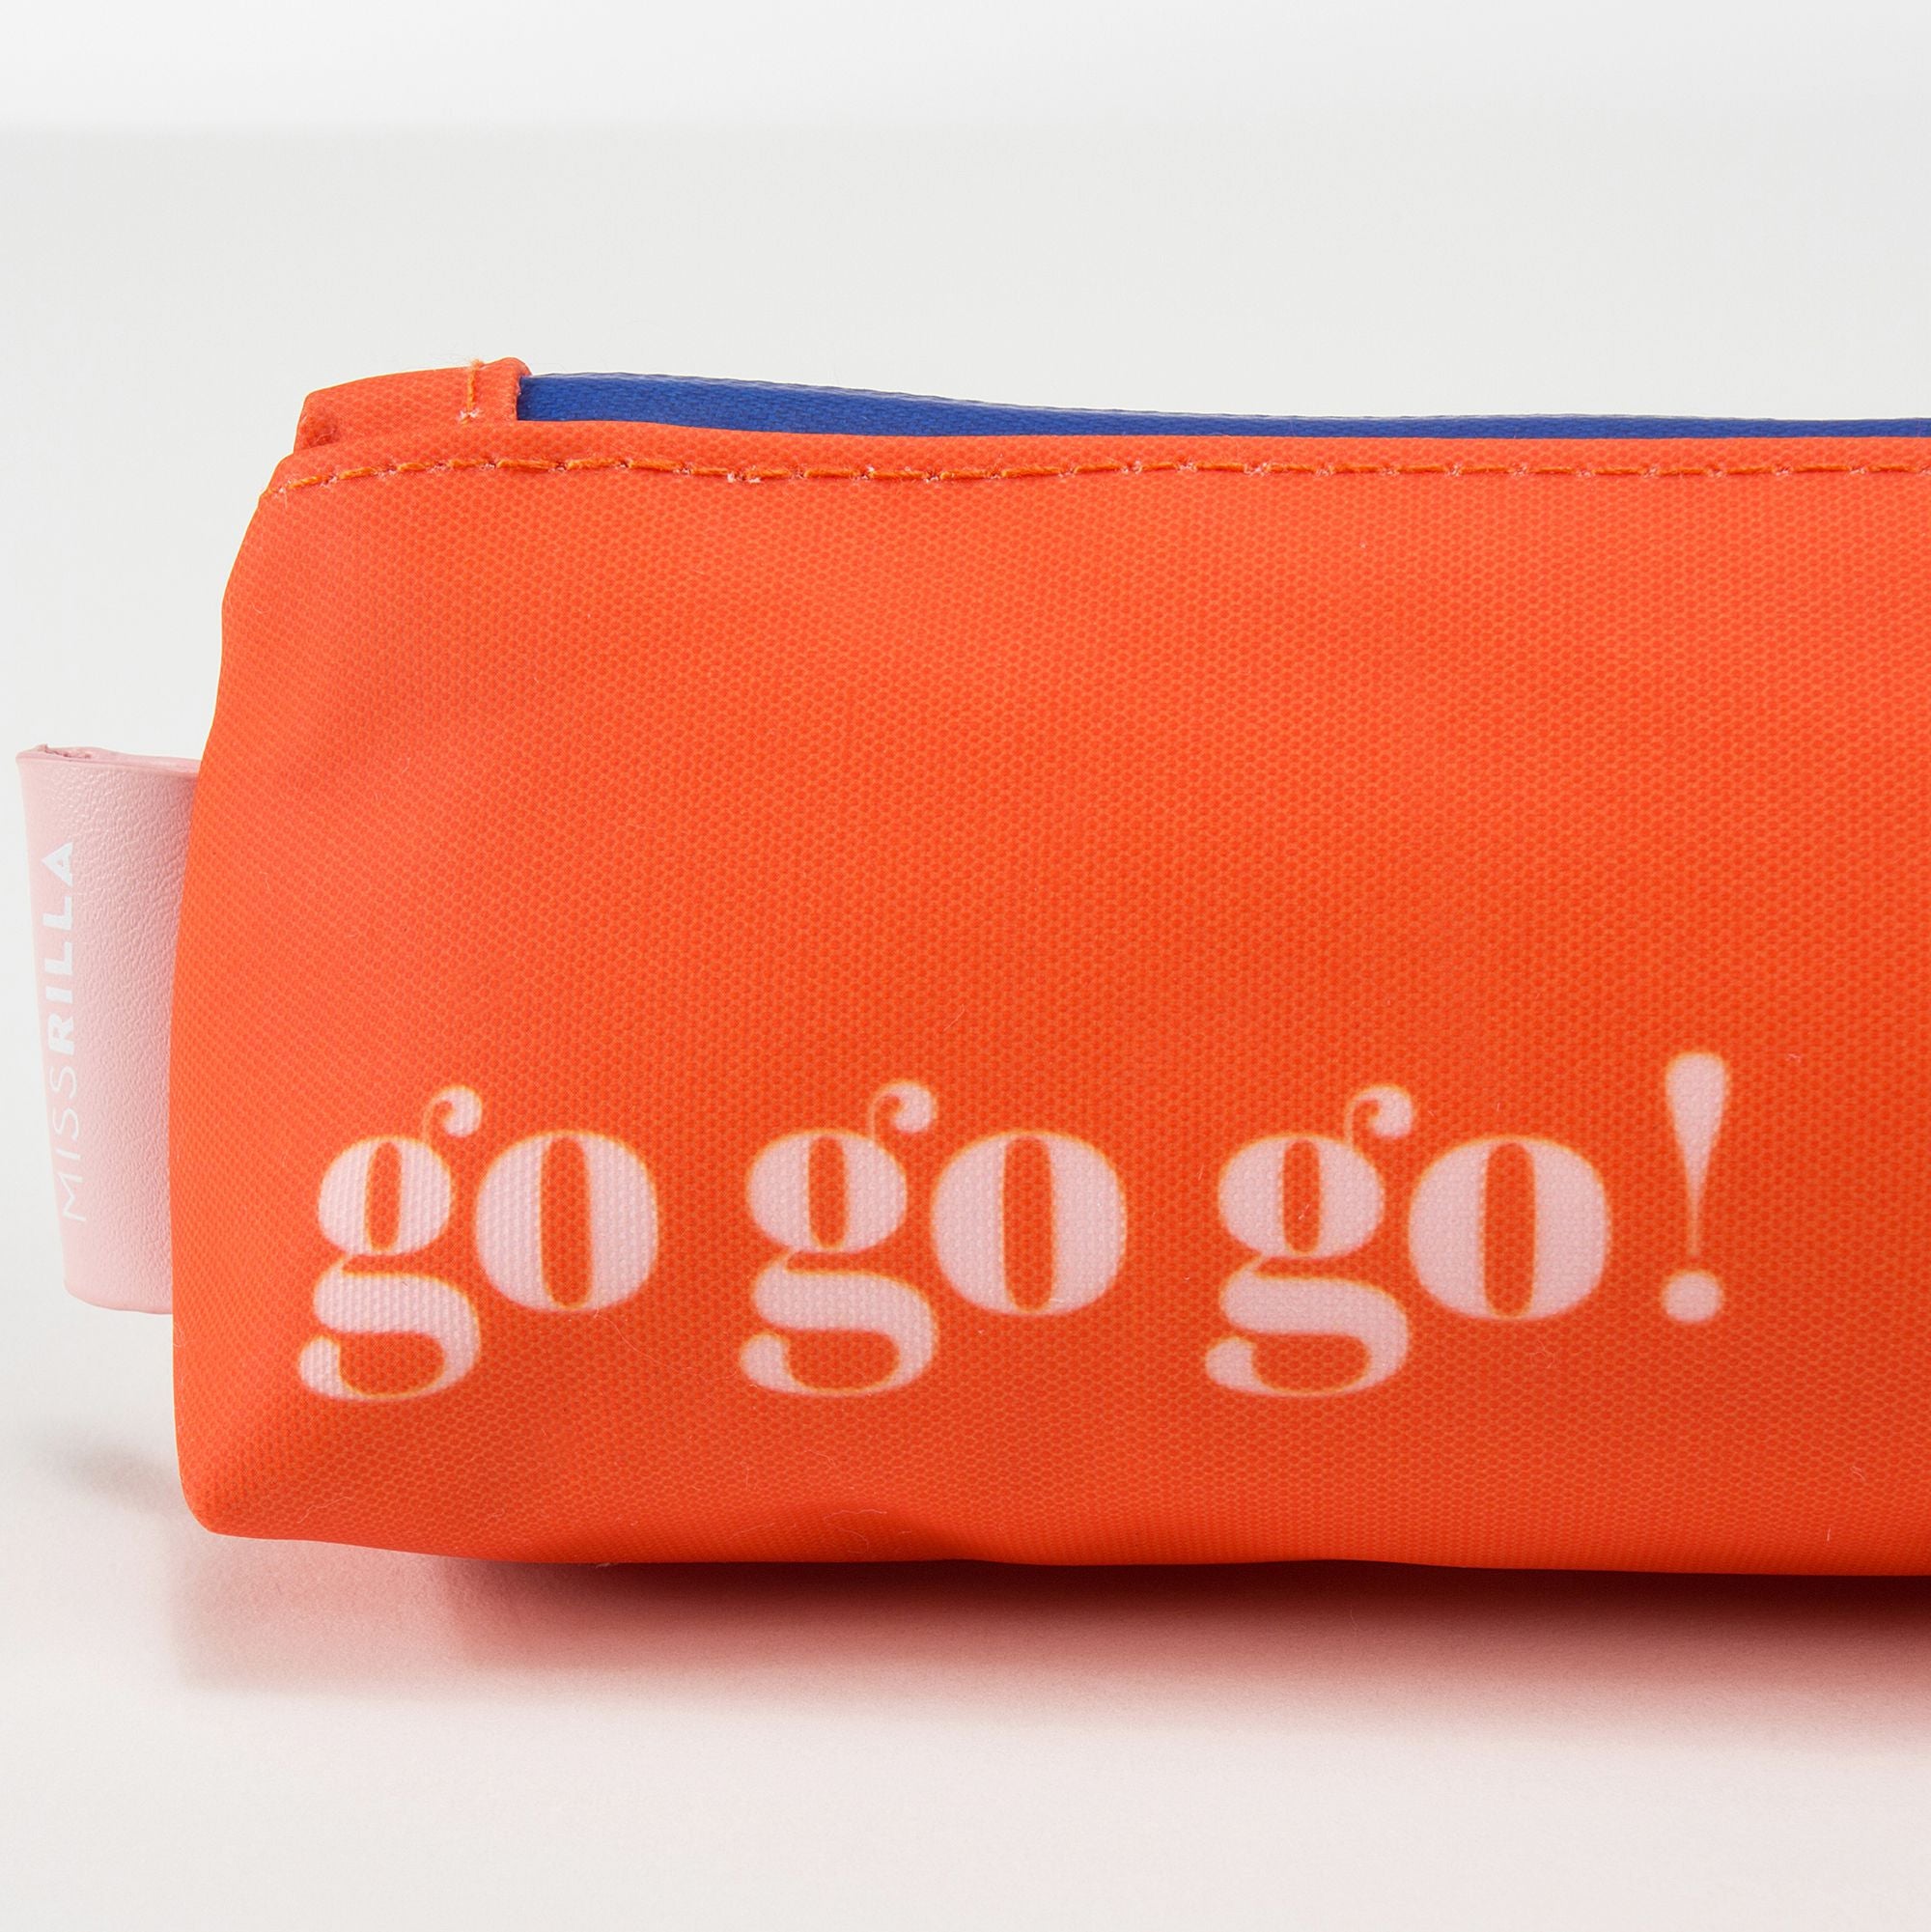 Girls Orange Go Go Go Pencil Pouch（23 x 9 cm）